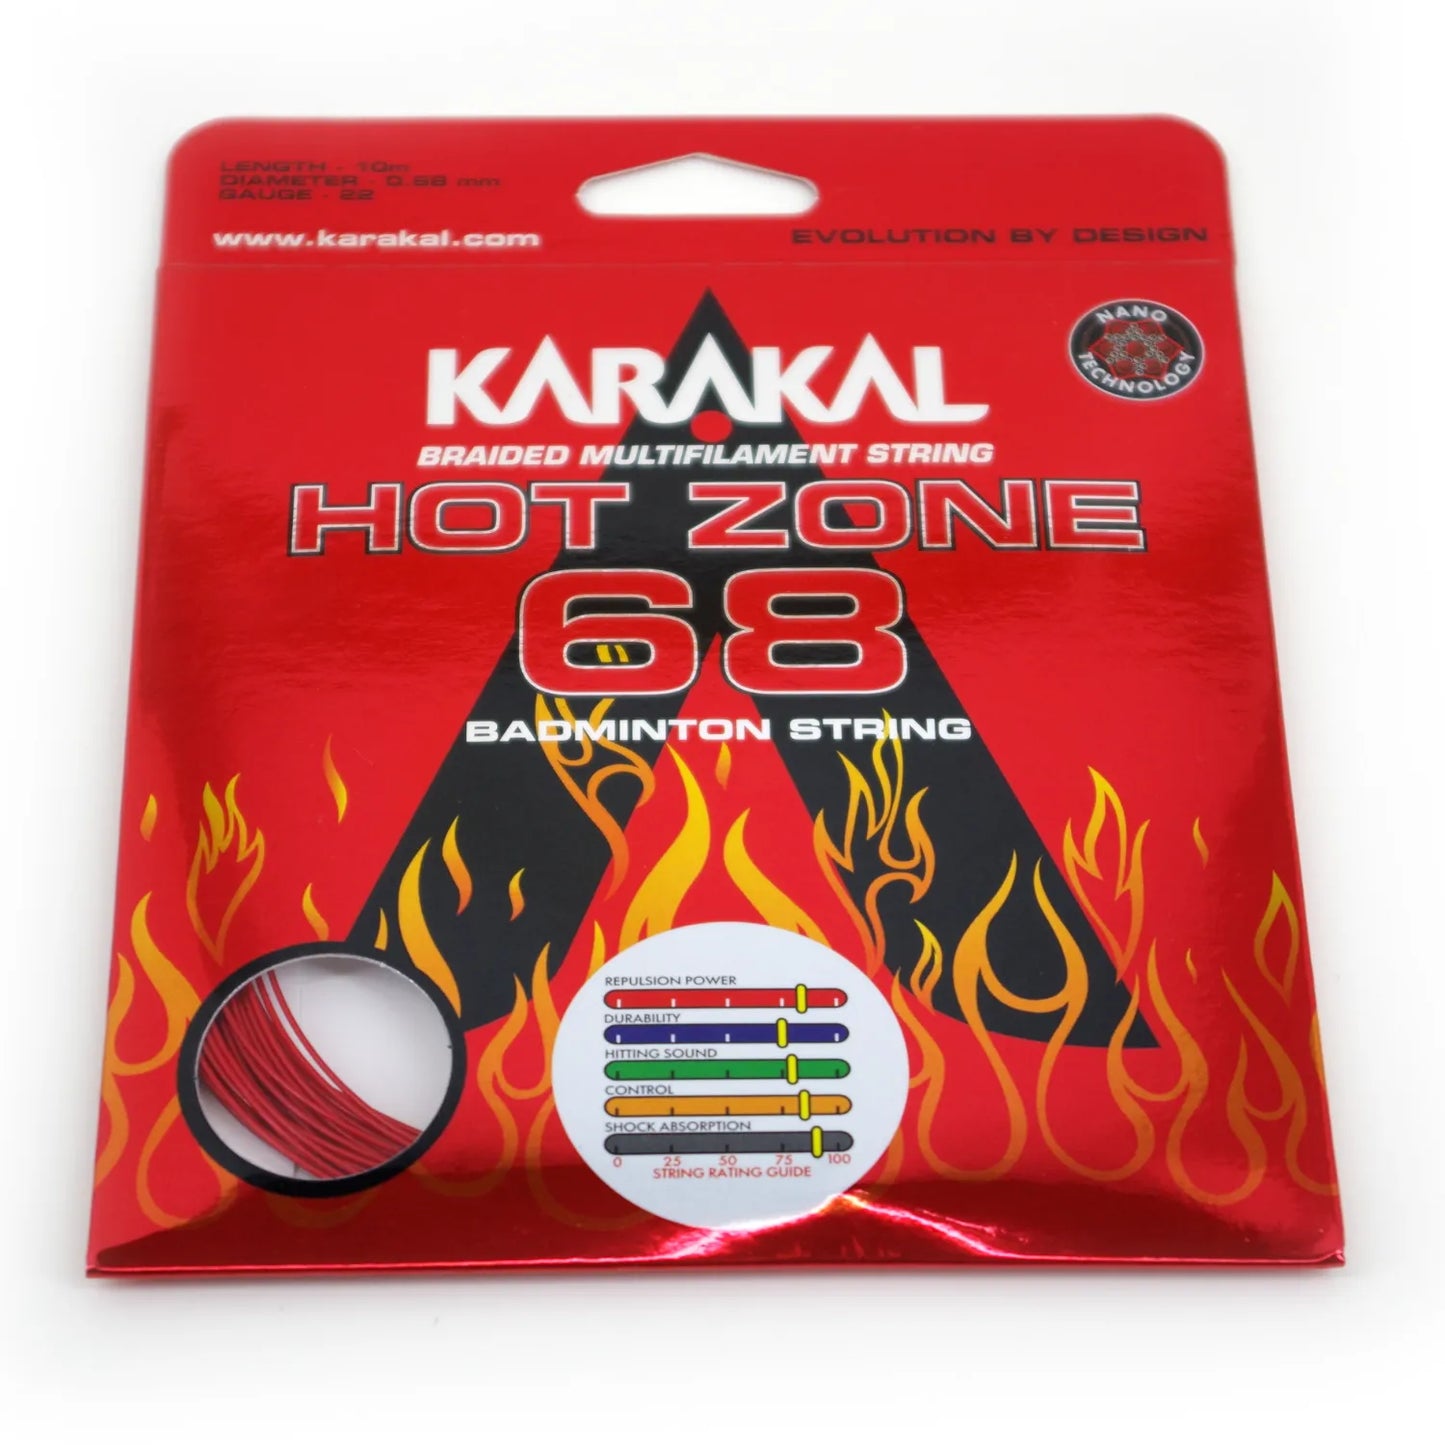 Karakal Hot Zone 68 Badminton String